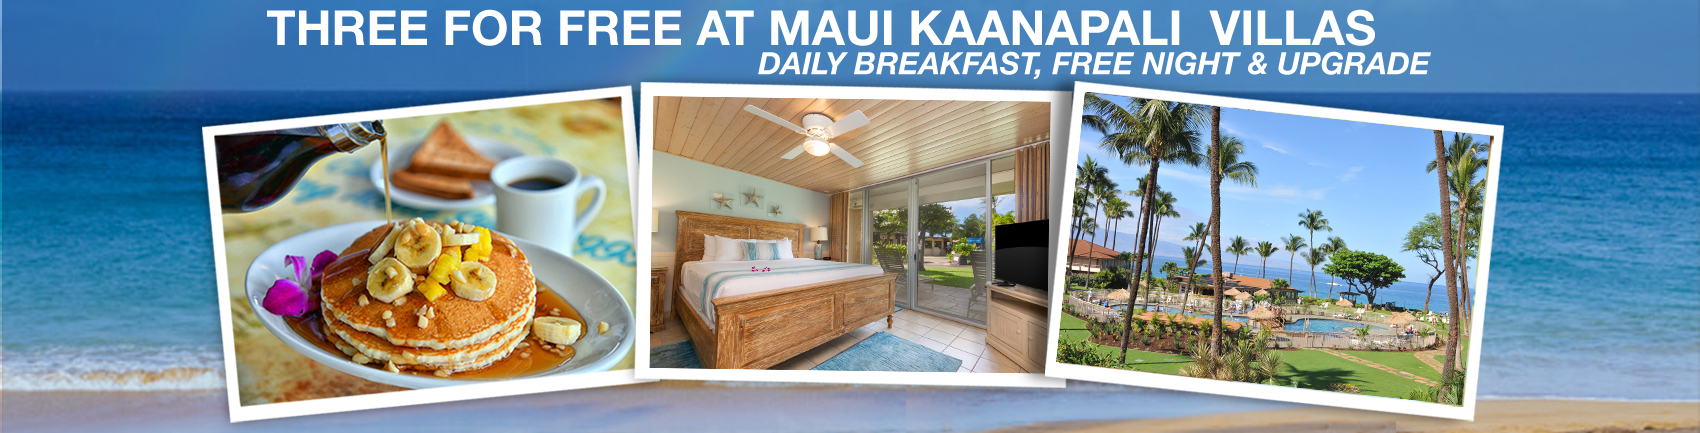 Three for Free at Maui Kaanapali Villas - Daily Breakfast, Free Night and Upgrade